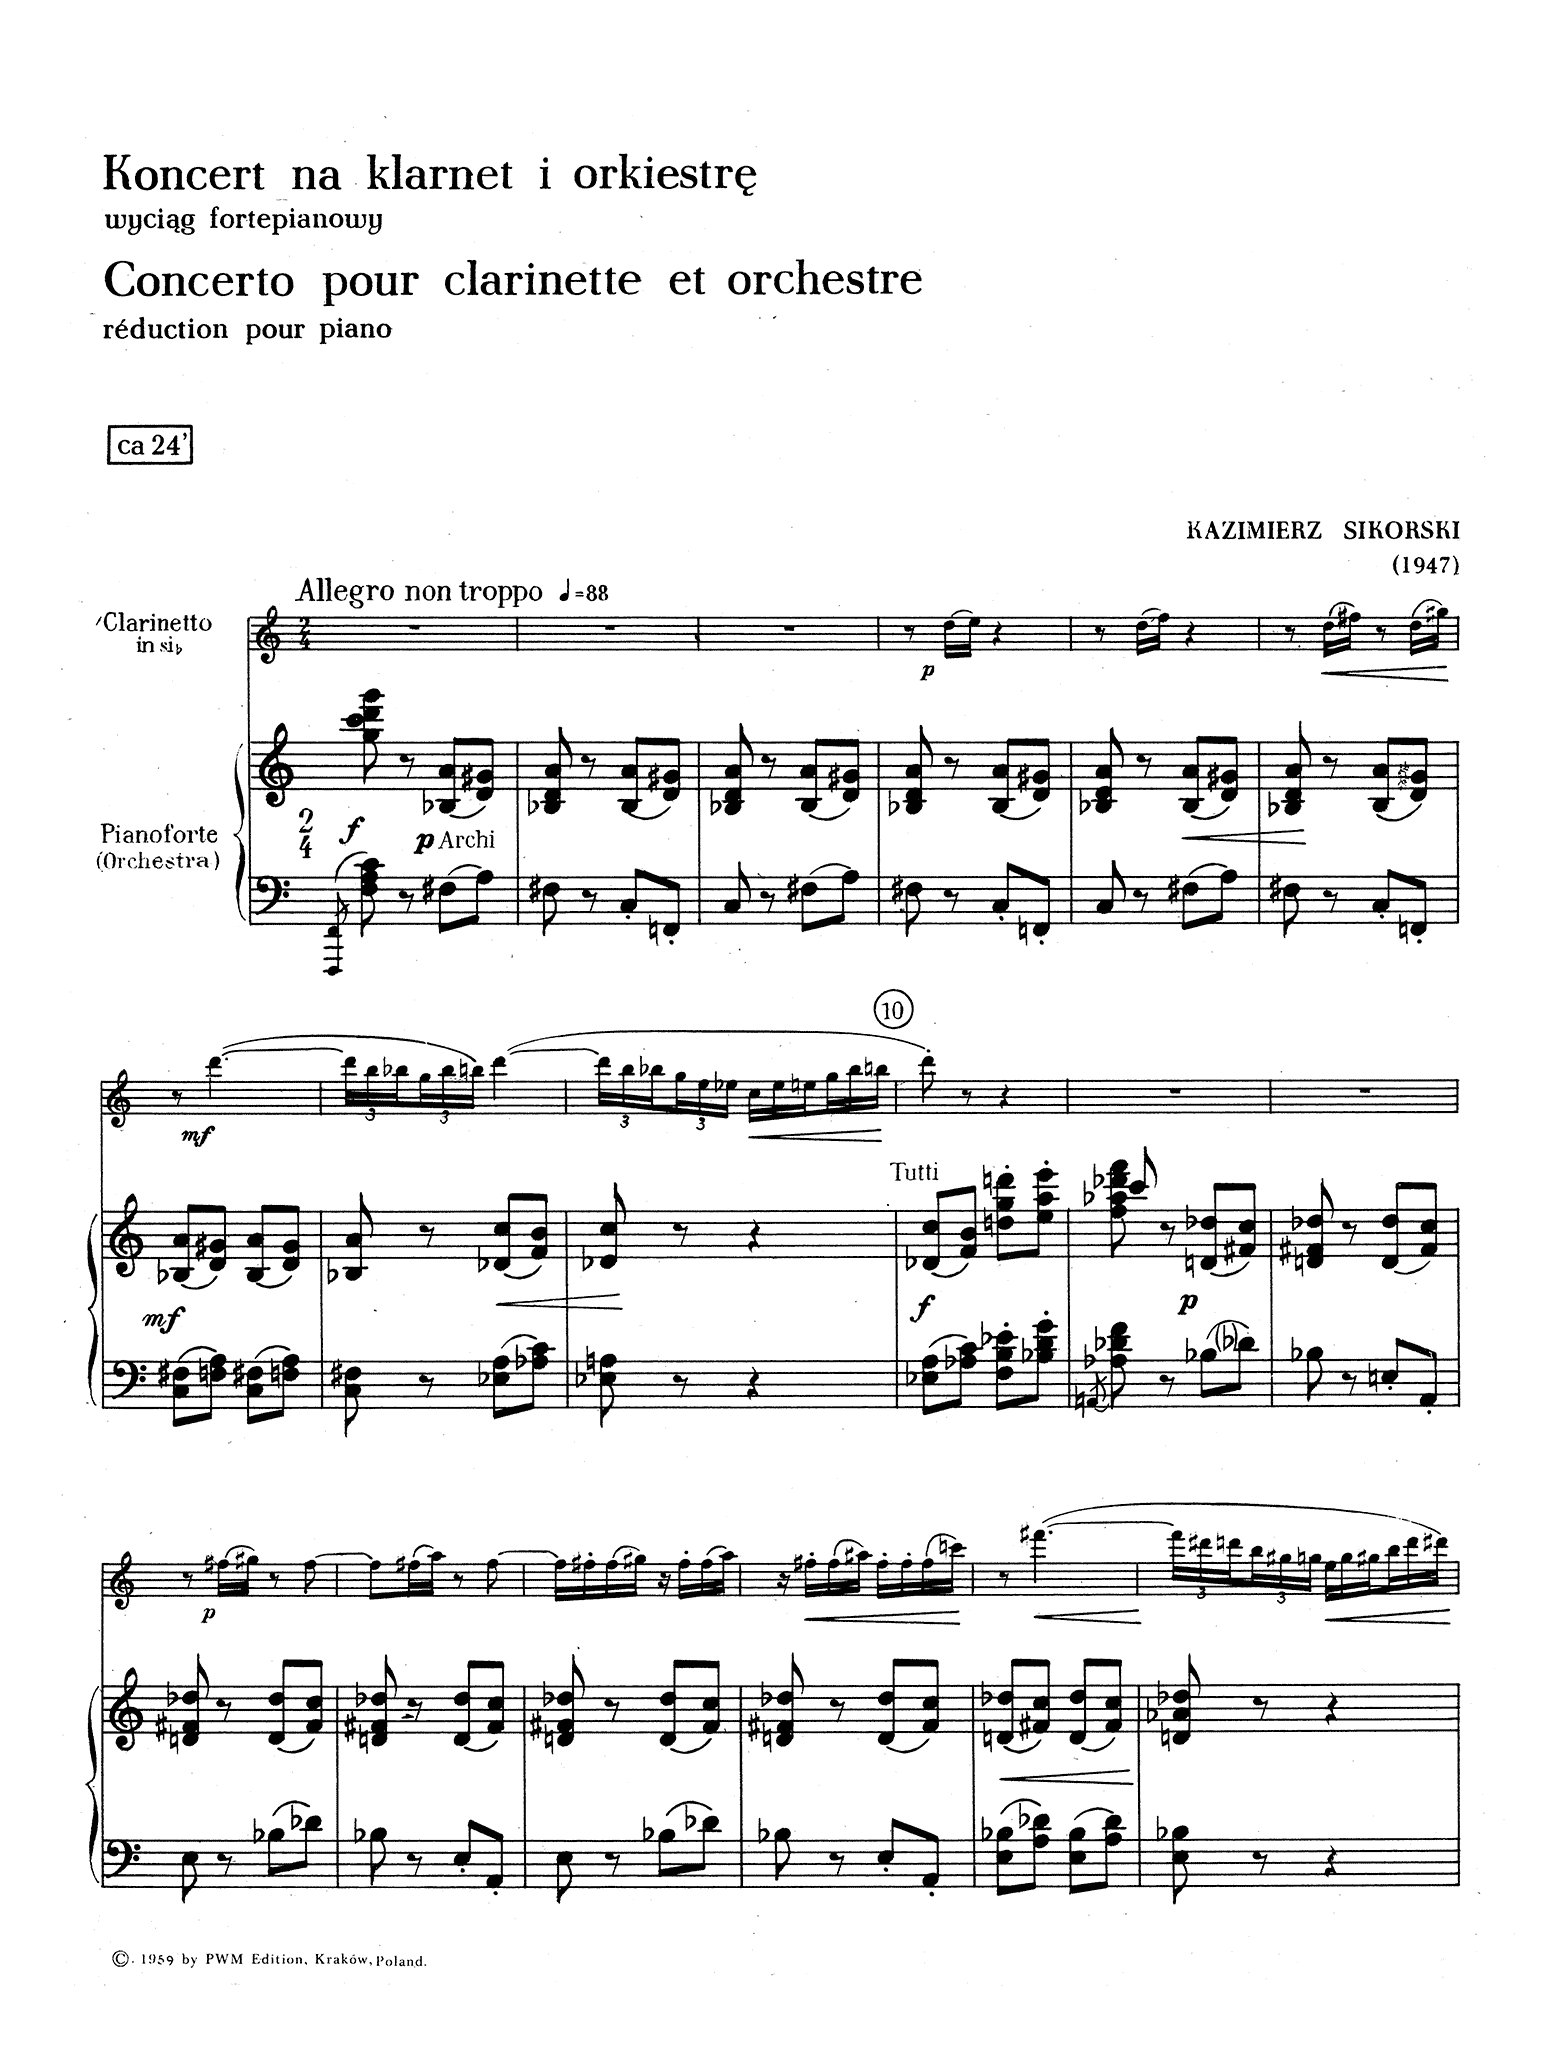 Kazimierz Sikorski Clarinet Concerto piano reduction - Movement 1